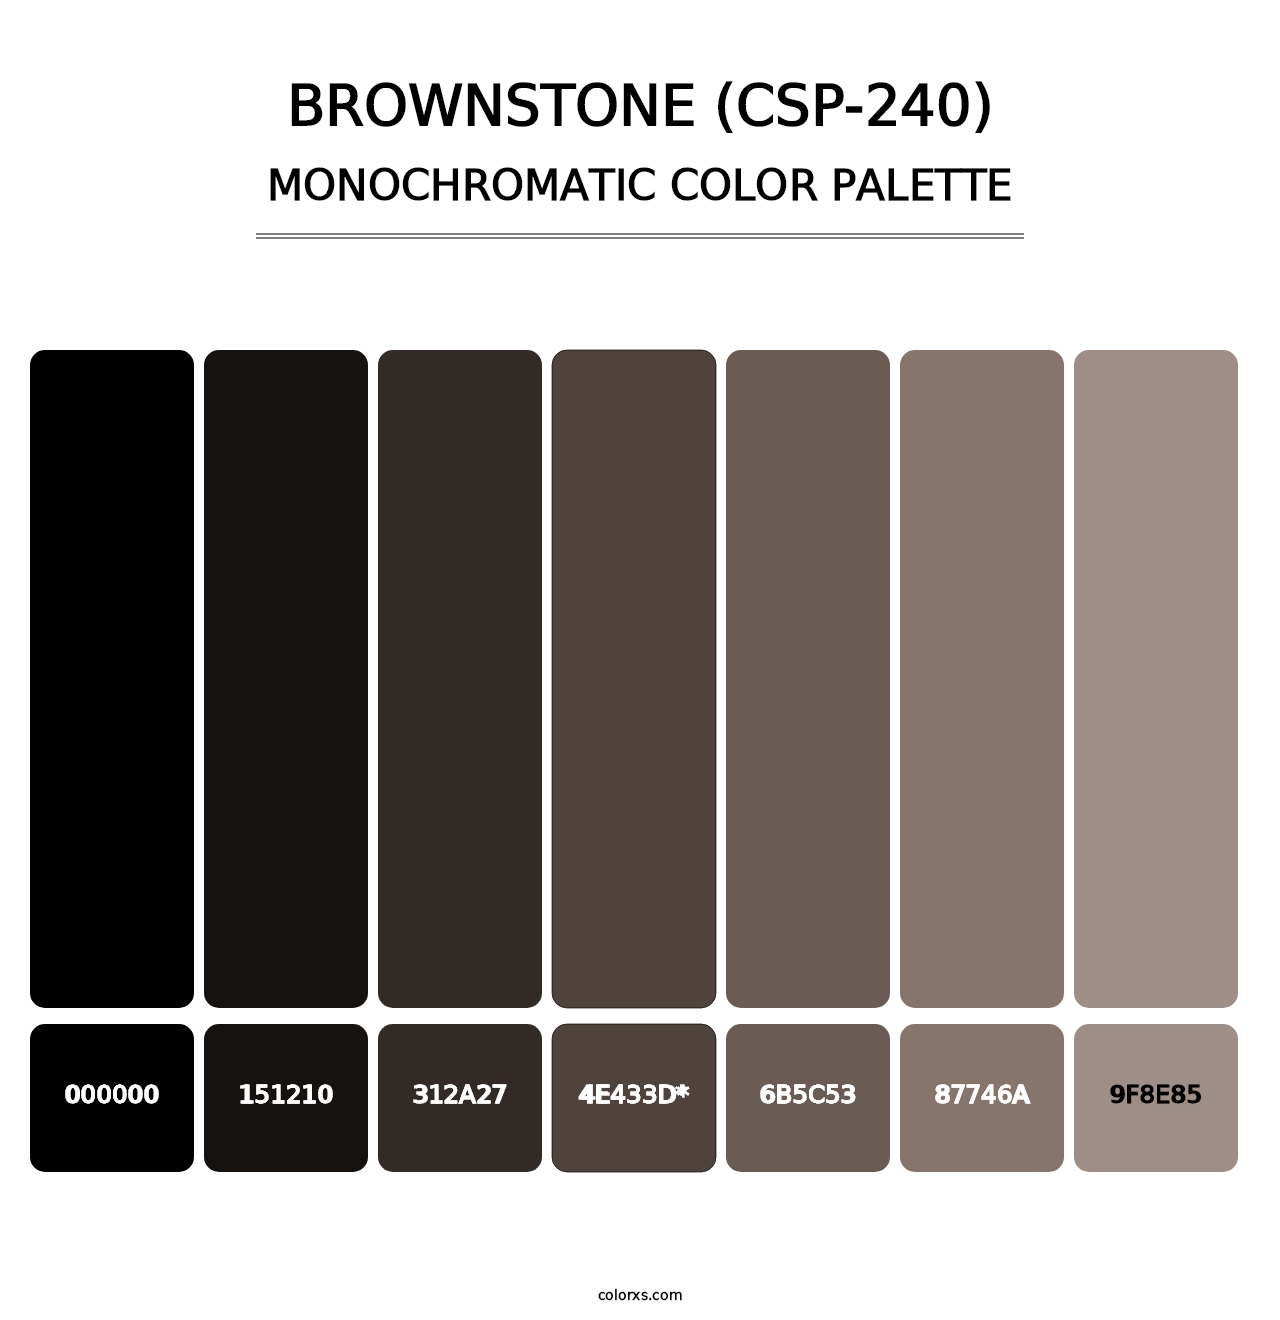 Brownstone (CSP-240) - Monochromatic Color Palette